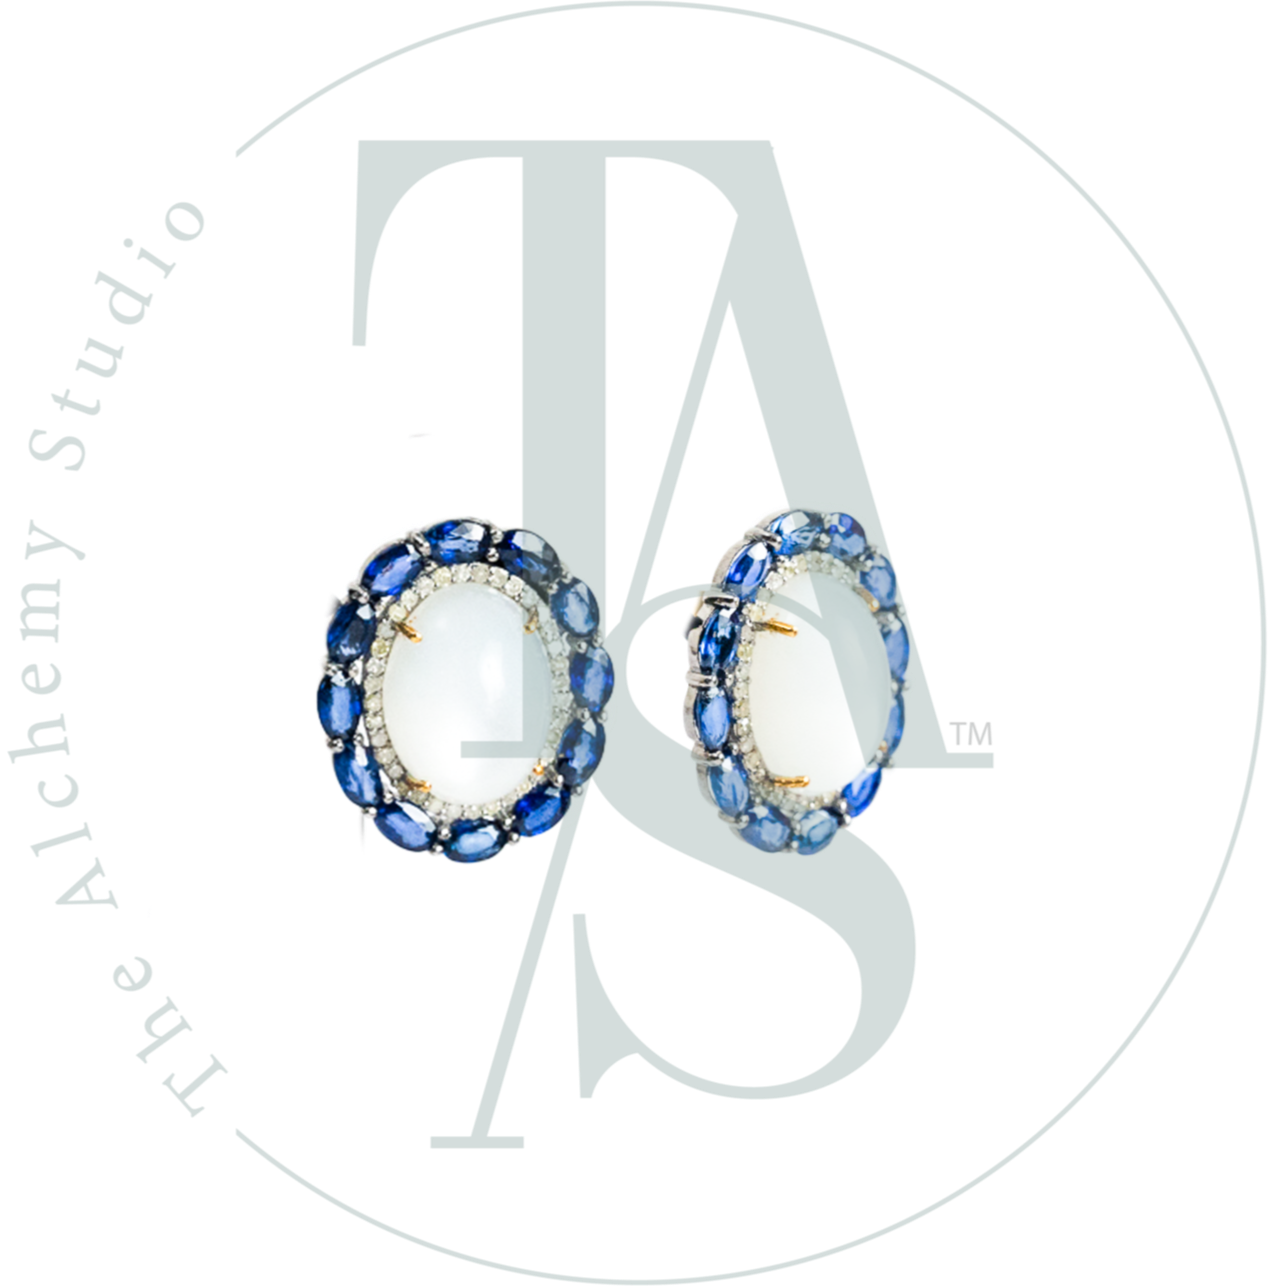 Luna Moonstone and Sapphire Earrings